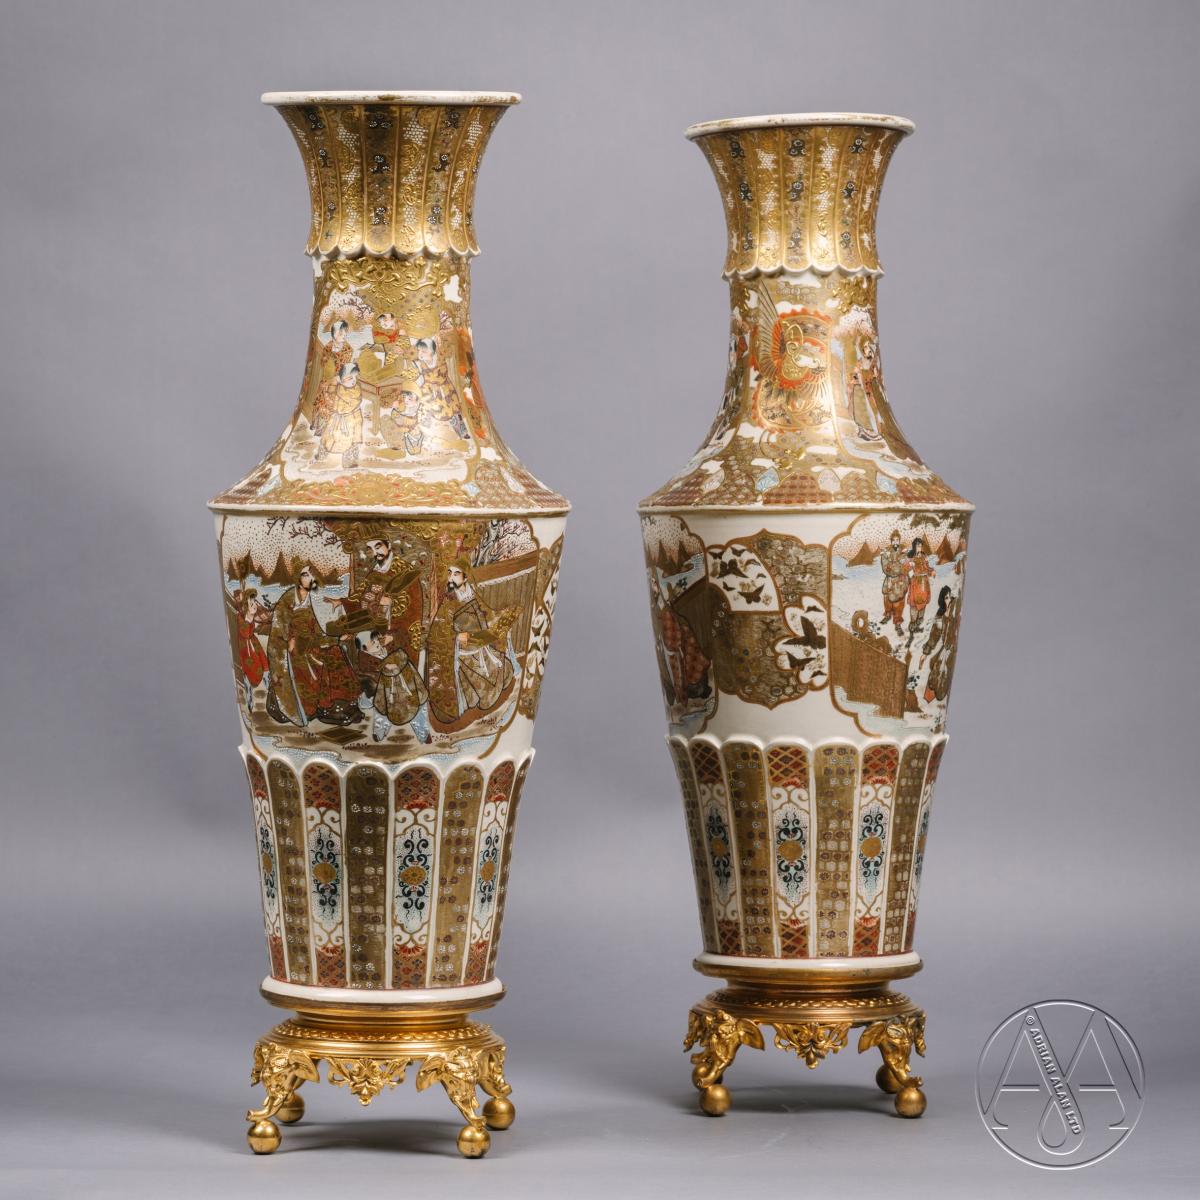 A Fine Pair of Japanese Satsuma Vases